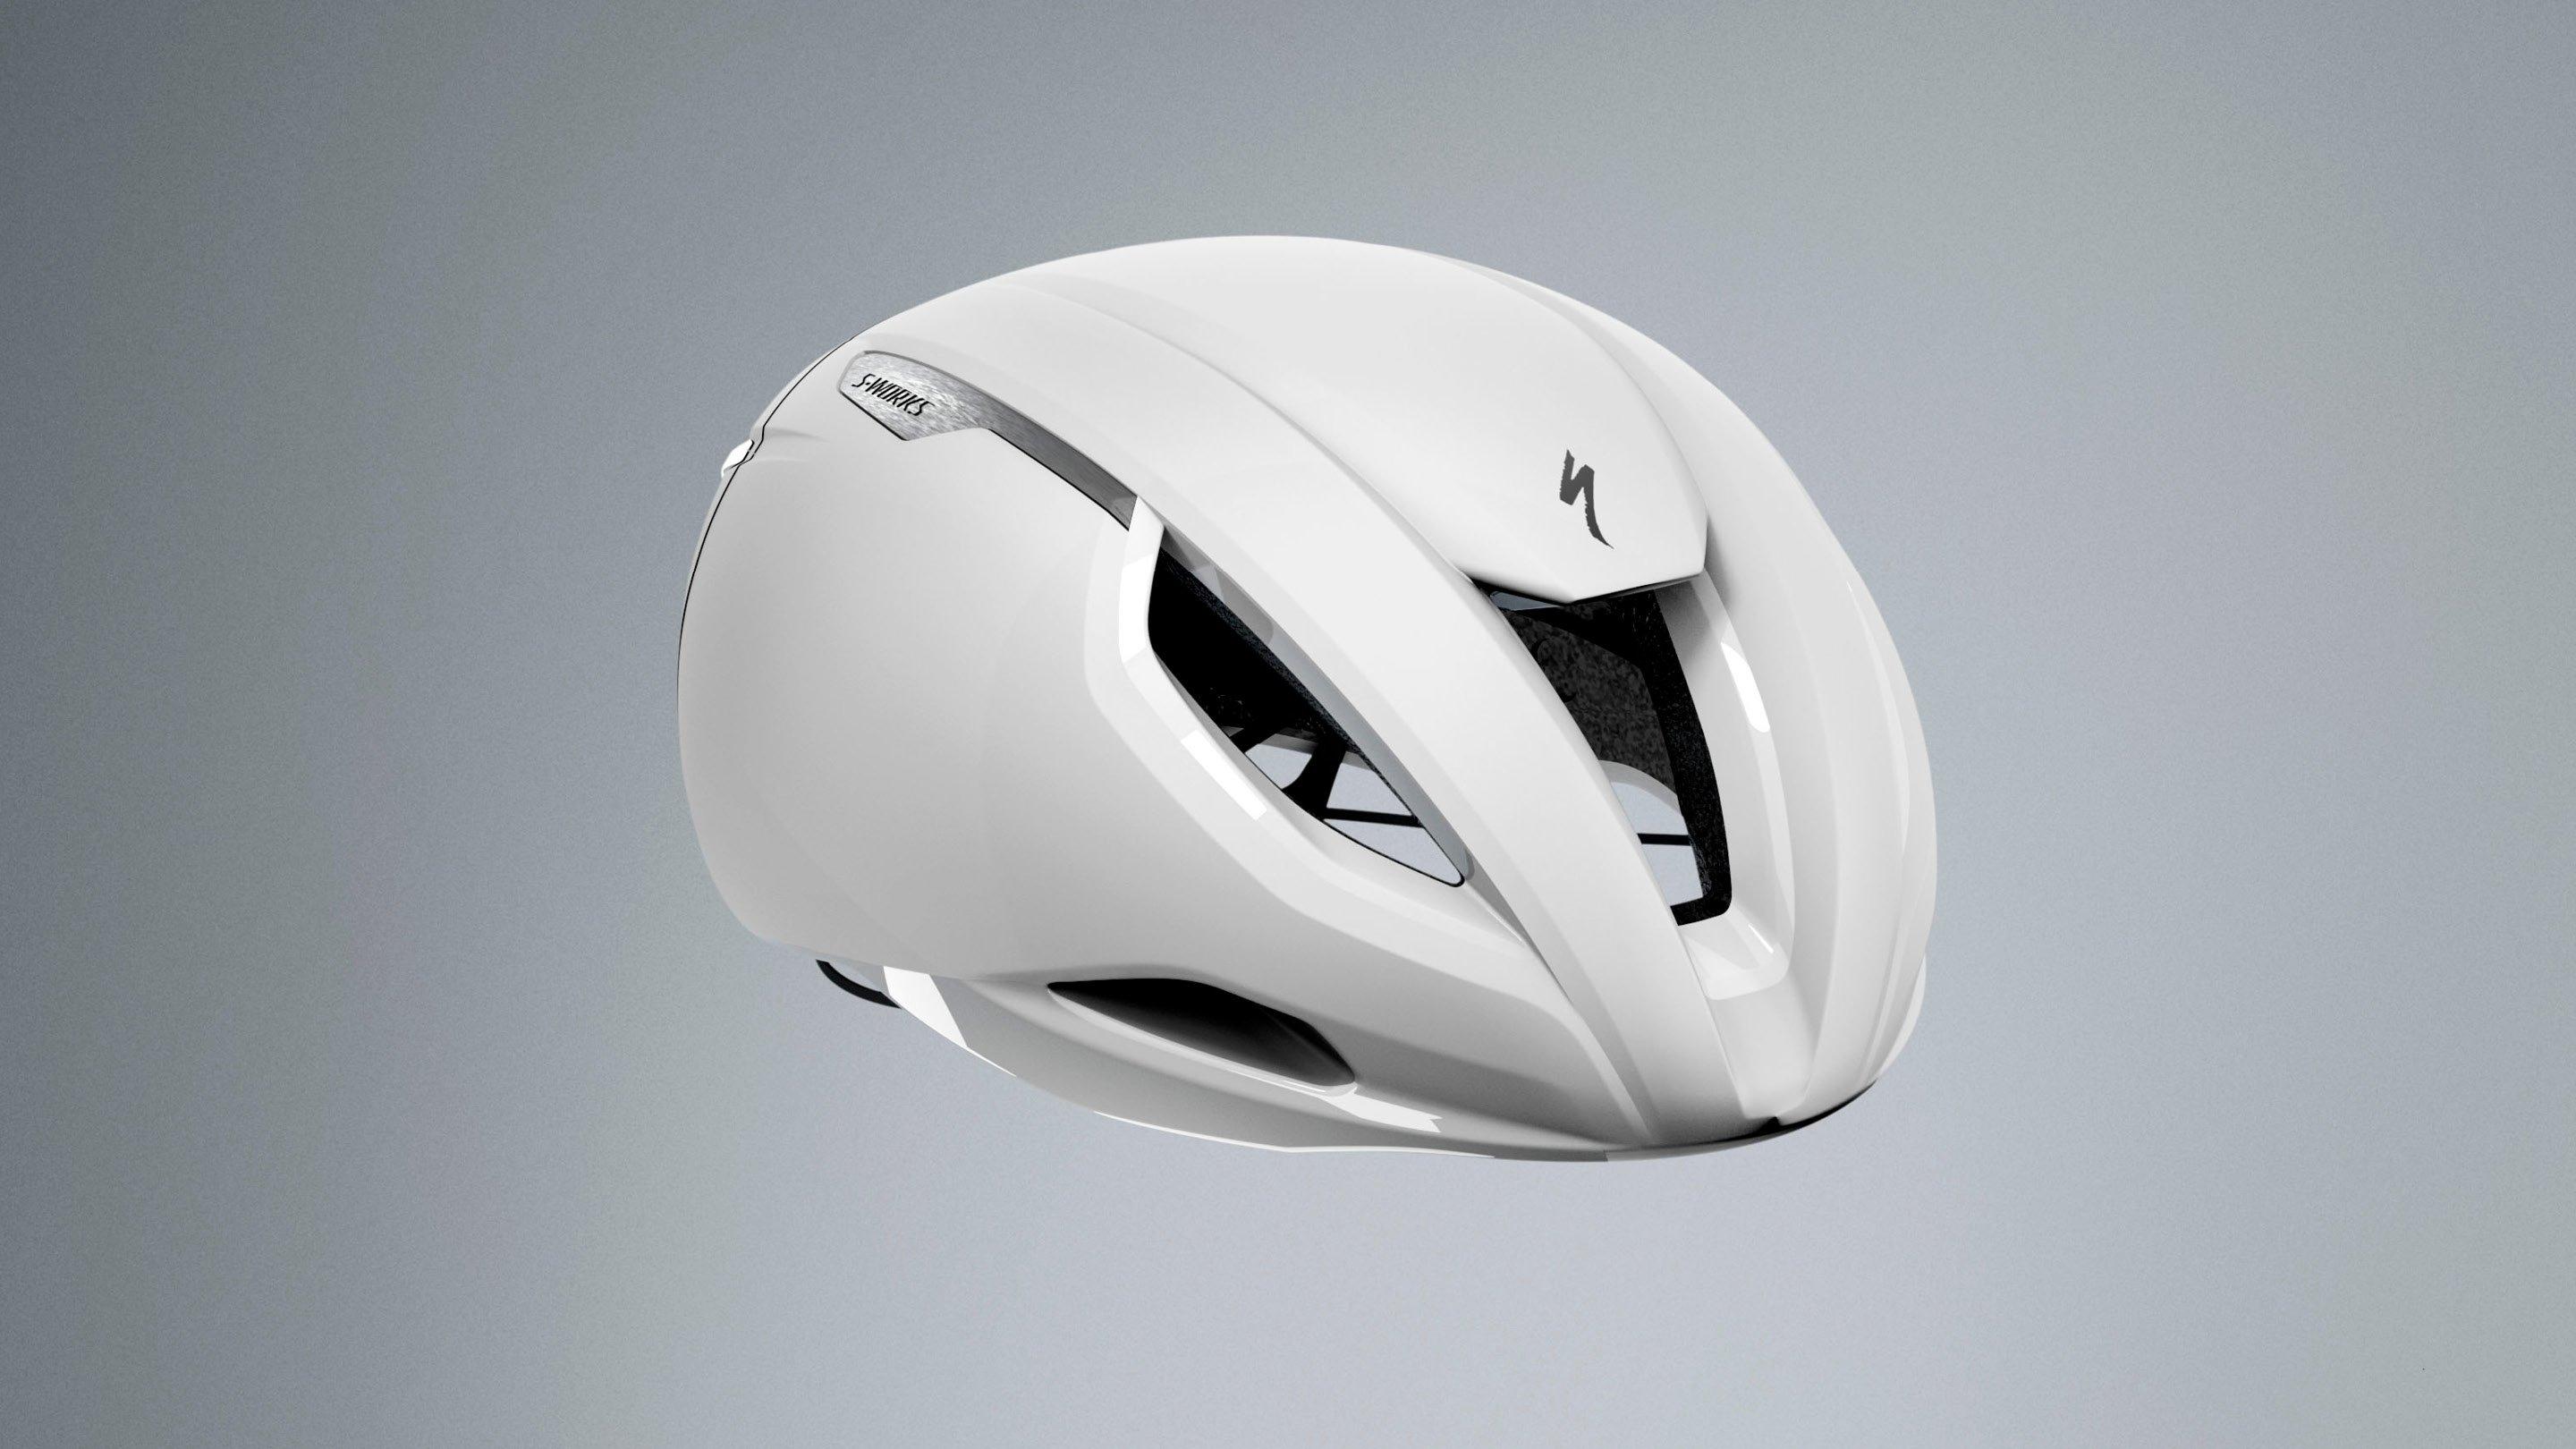 Specialized S-Works Evade 3 Mips Helmet - Men